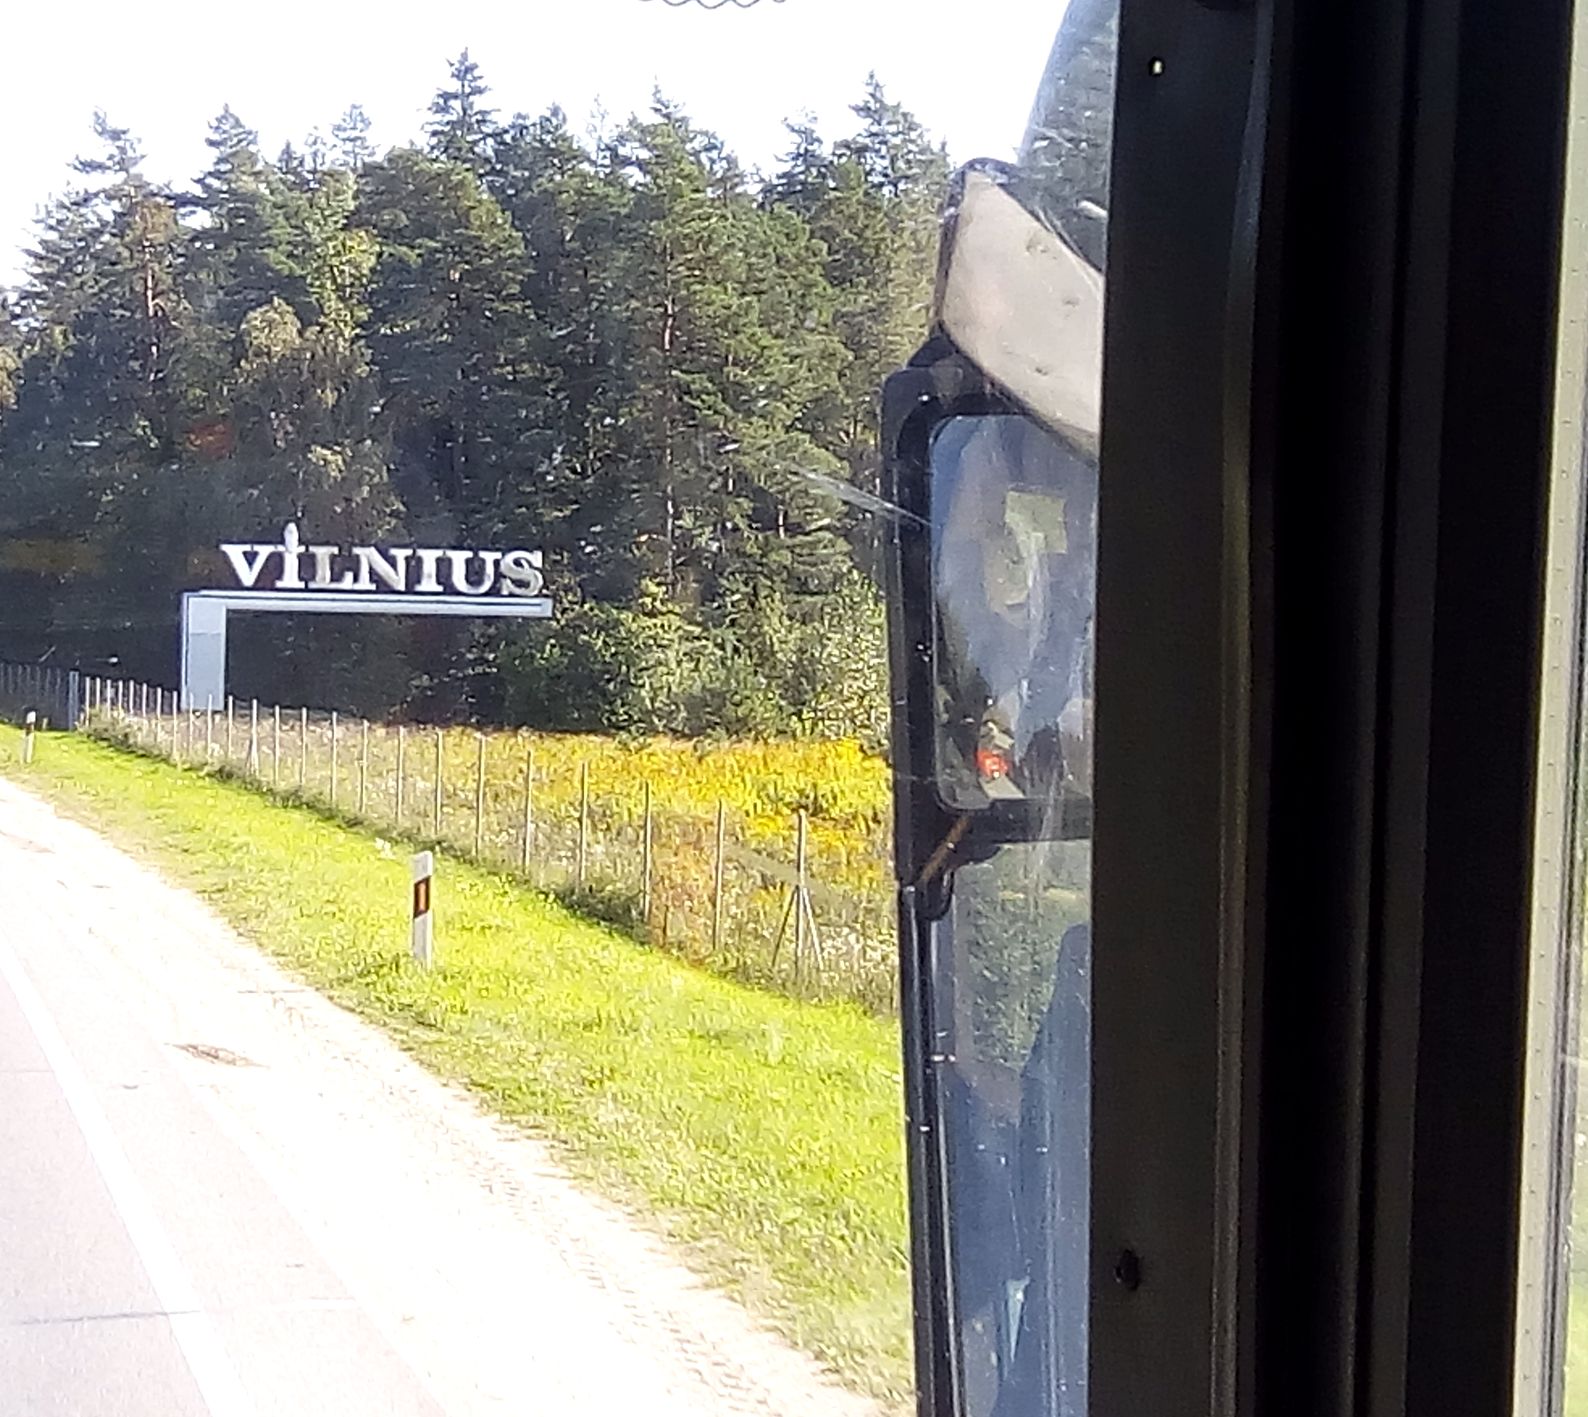 Destination: Vilnius